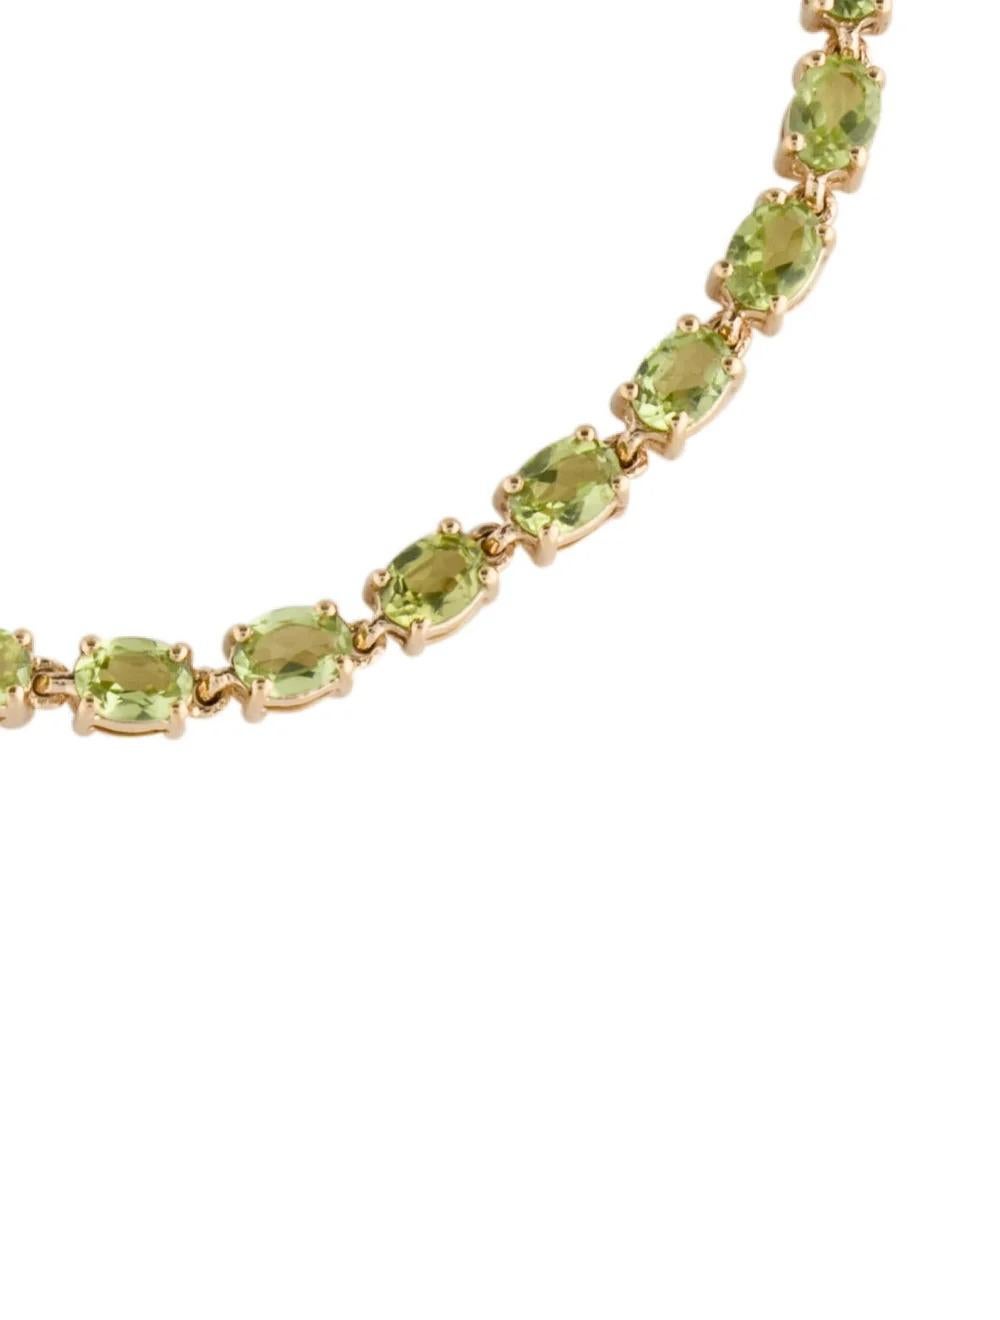 Exquisite 14K Peridot Link Bracelet - Elegant Design, Vibrant Green Gemstones In New Condition For Sale In Holtsville, NY